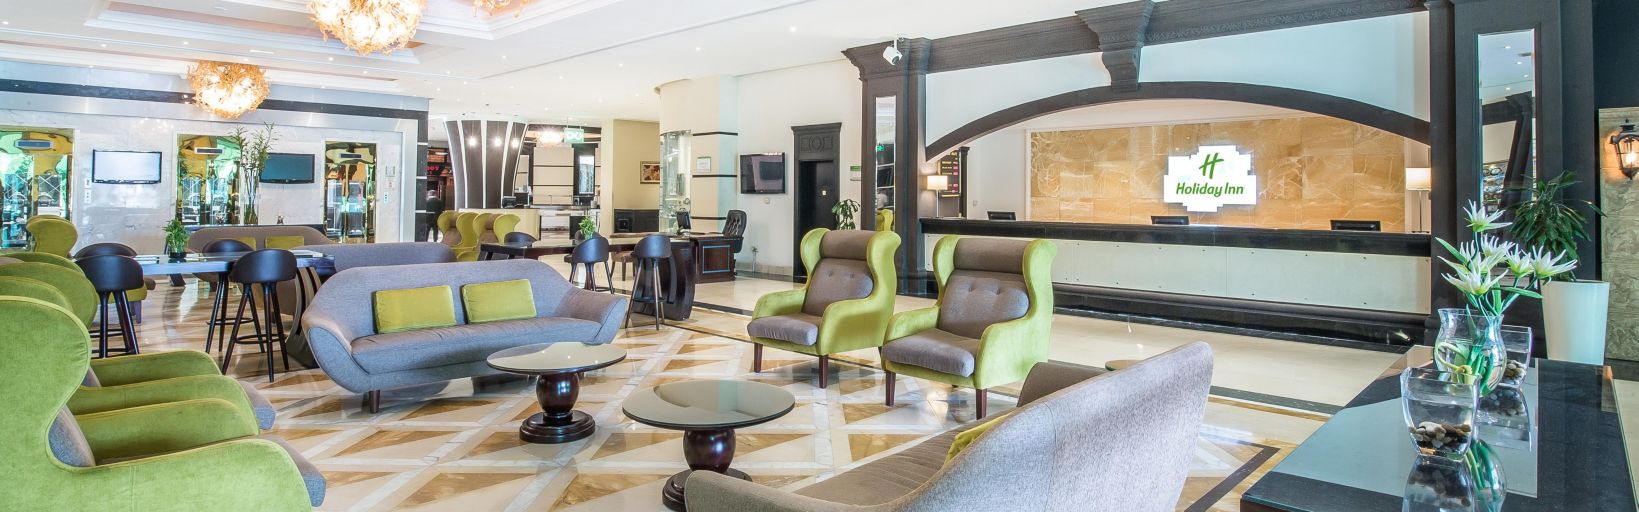 Holiday Inn BUR DUBAI - EMBASSY DISTRICT, Dubai | Venue | Eventopedia